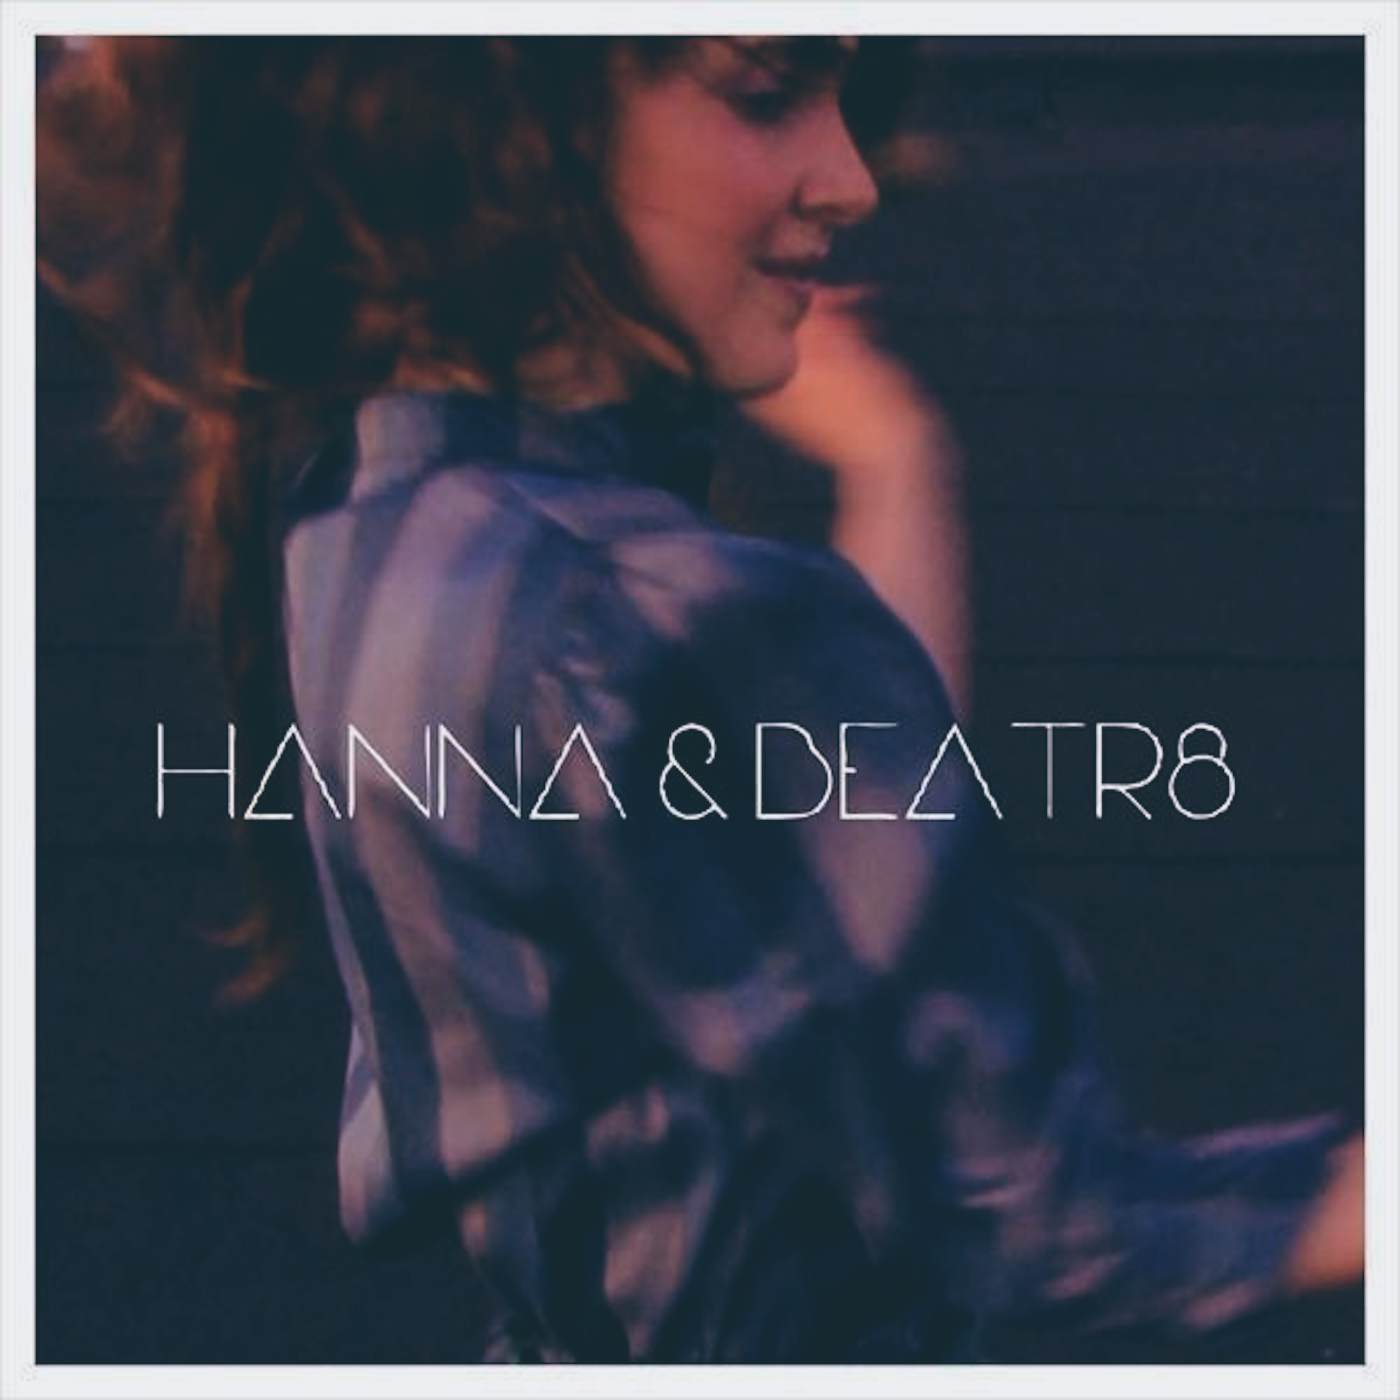 Hanna & Beatr8